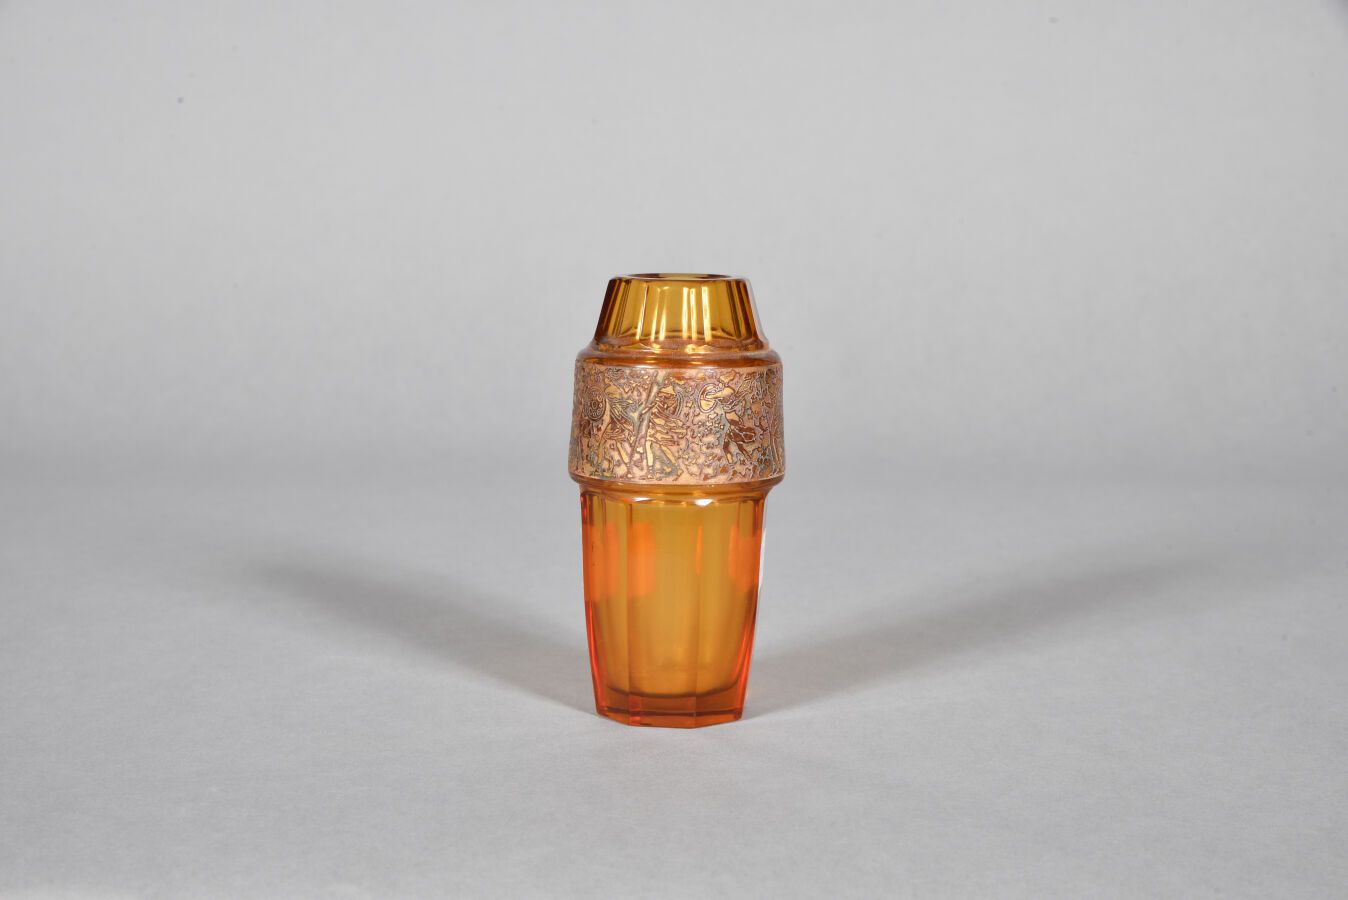 Null MOSER - KARLSBAD (SLOWAKEI)

Eiförmige Vase mit abgeschnittenem Korpus und &hellip;